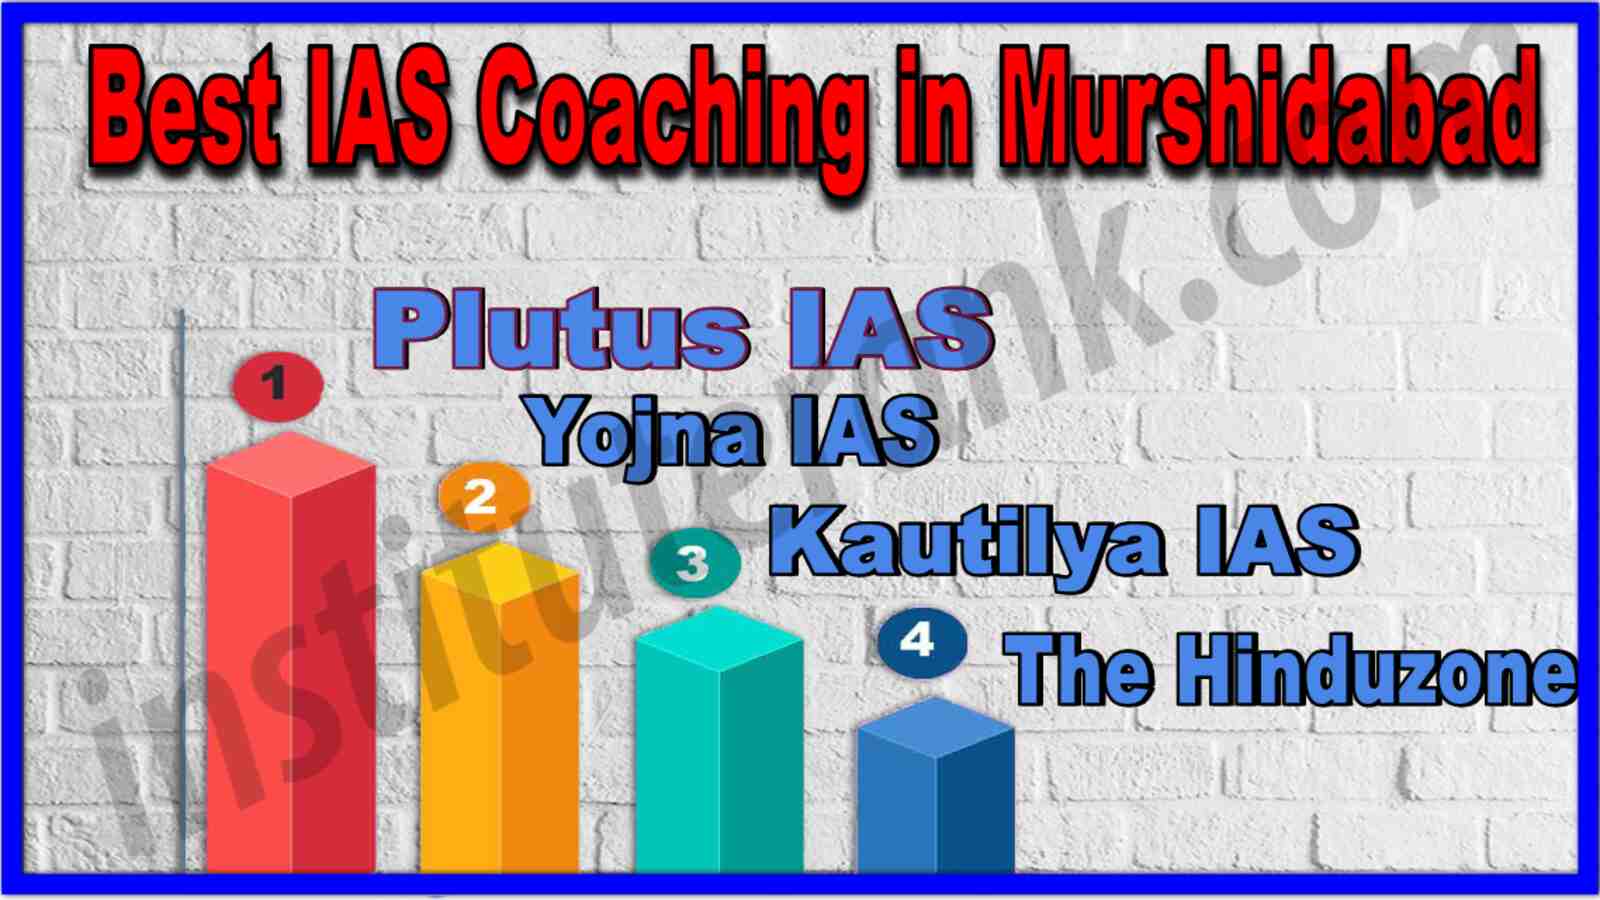 Best IAS Coaching in Murshidabad